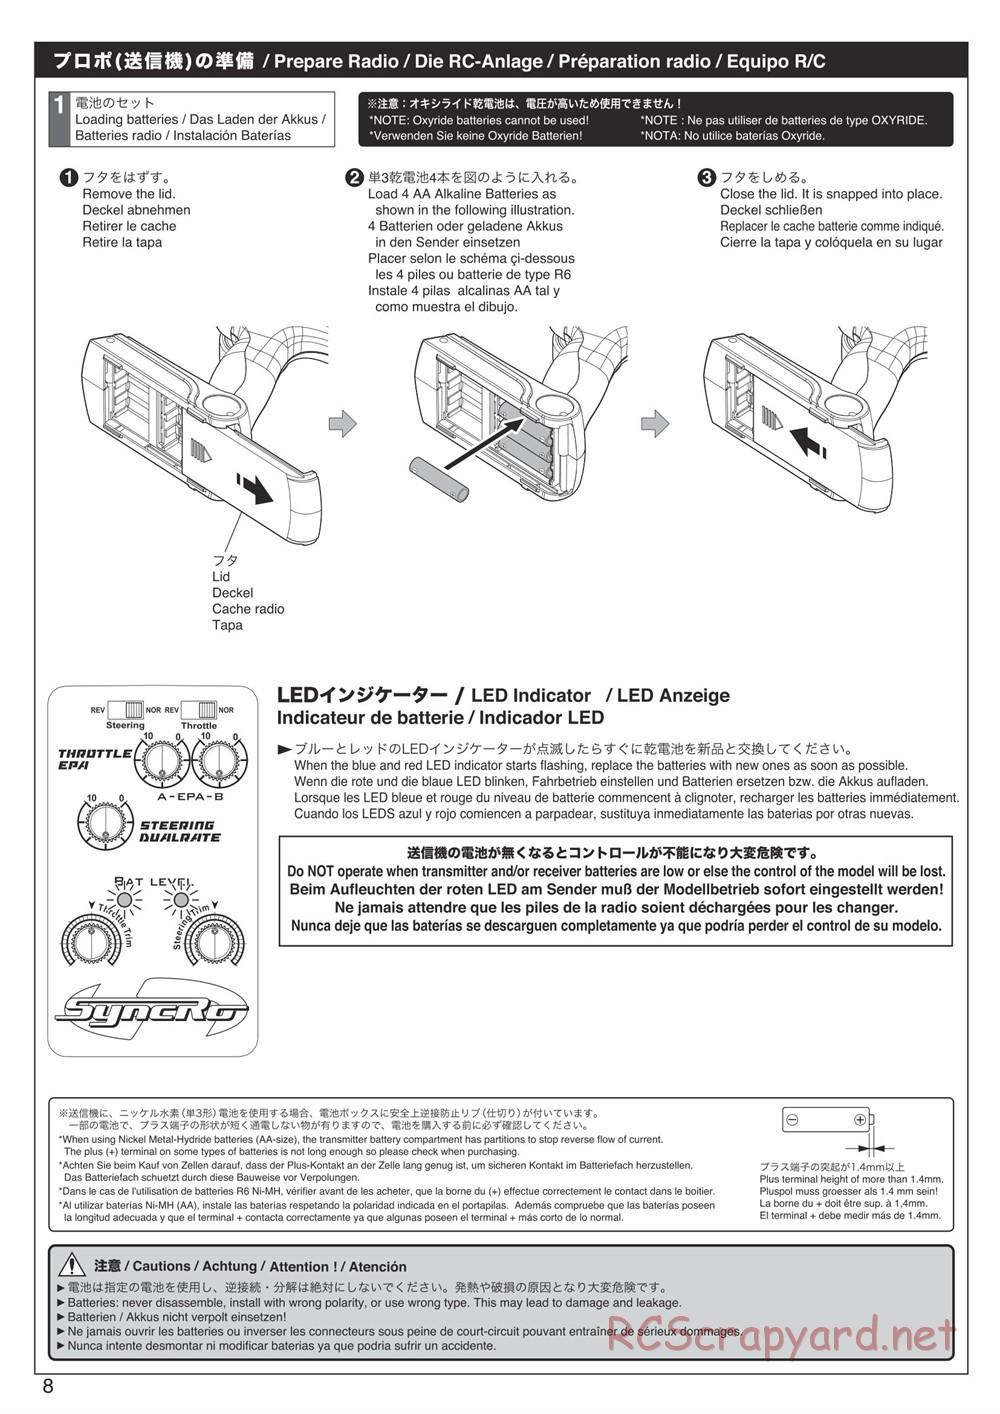 Kyosho - DBX 2.0 - Manual - Page 8